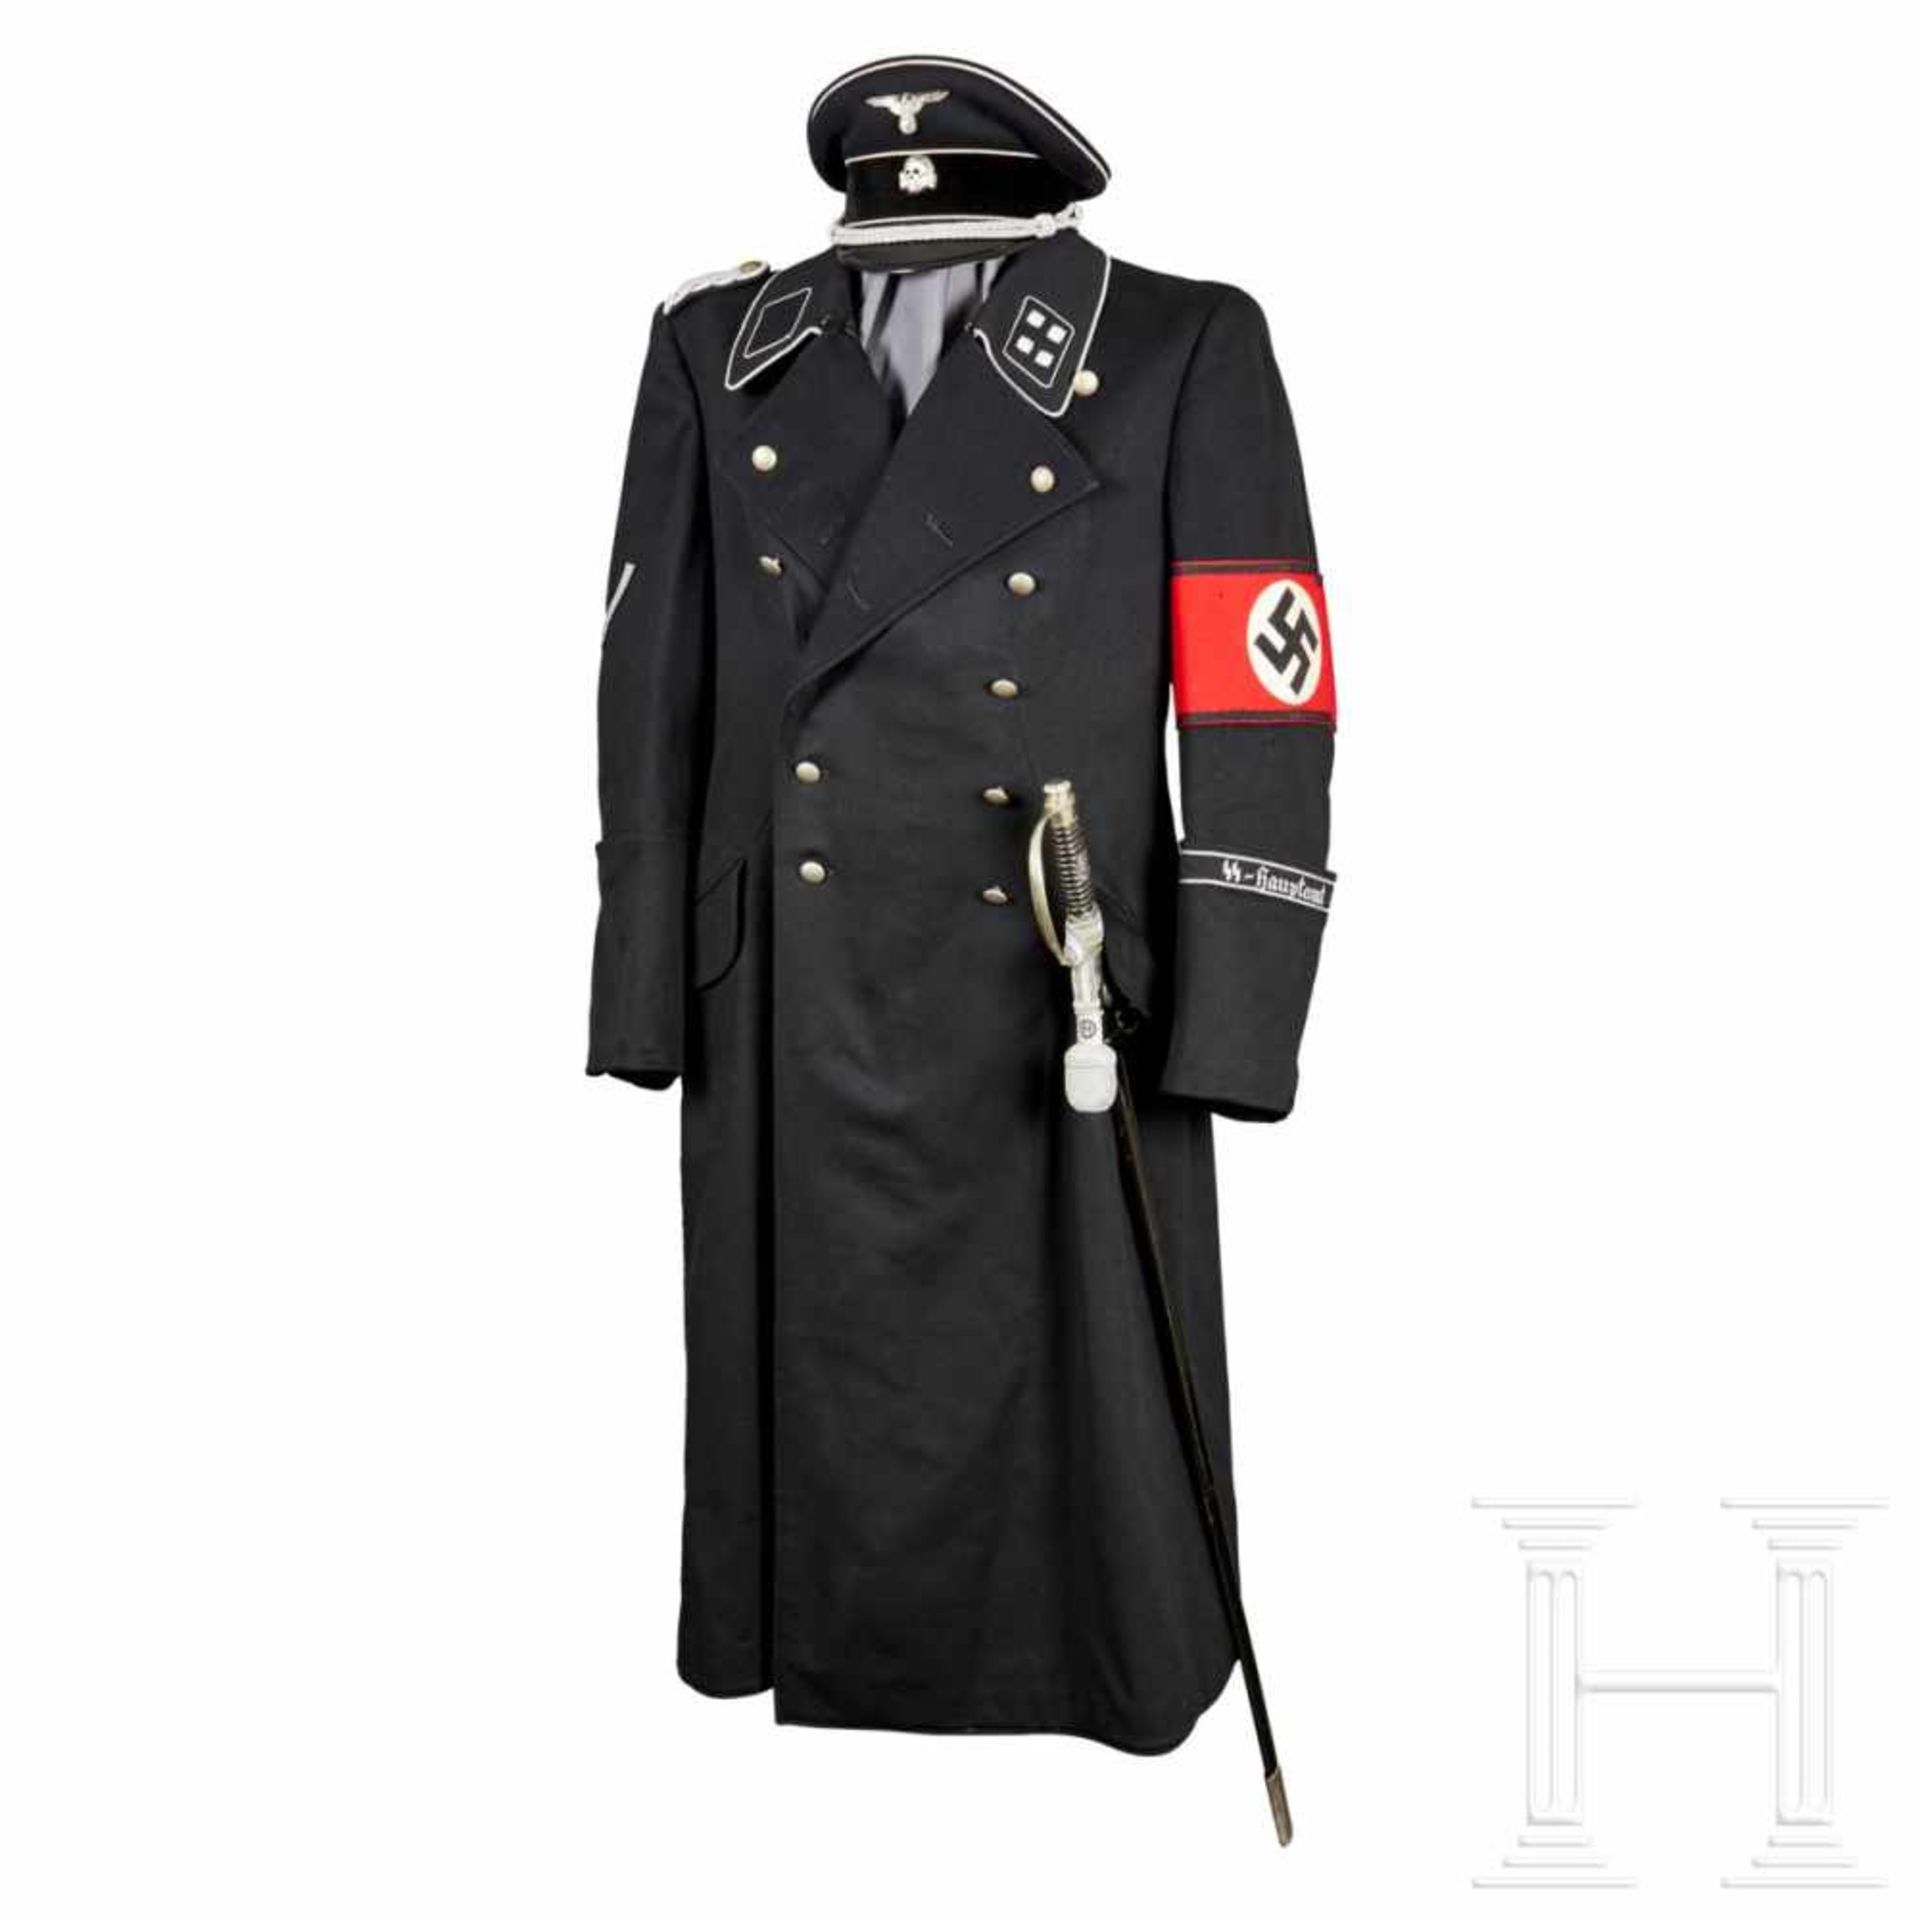 A Uniform Coat, Hat and Sword of SS-Sturmbannführer Georg Winter - Husband of Annie Winter, Adolf